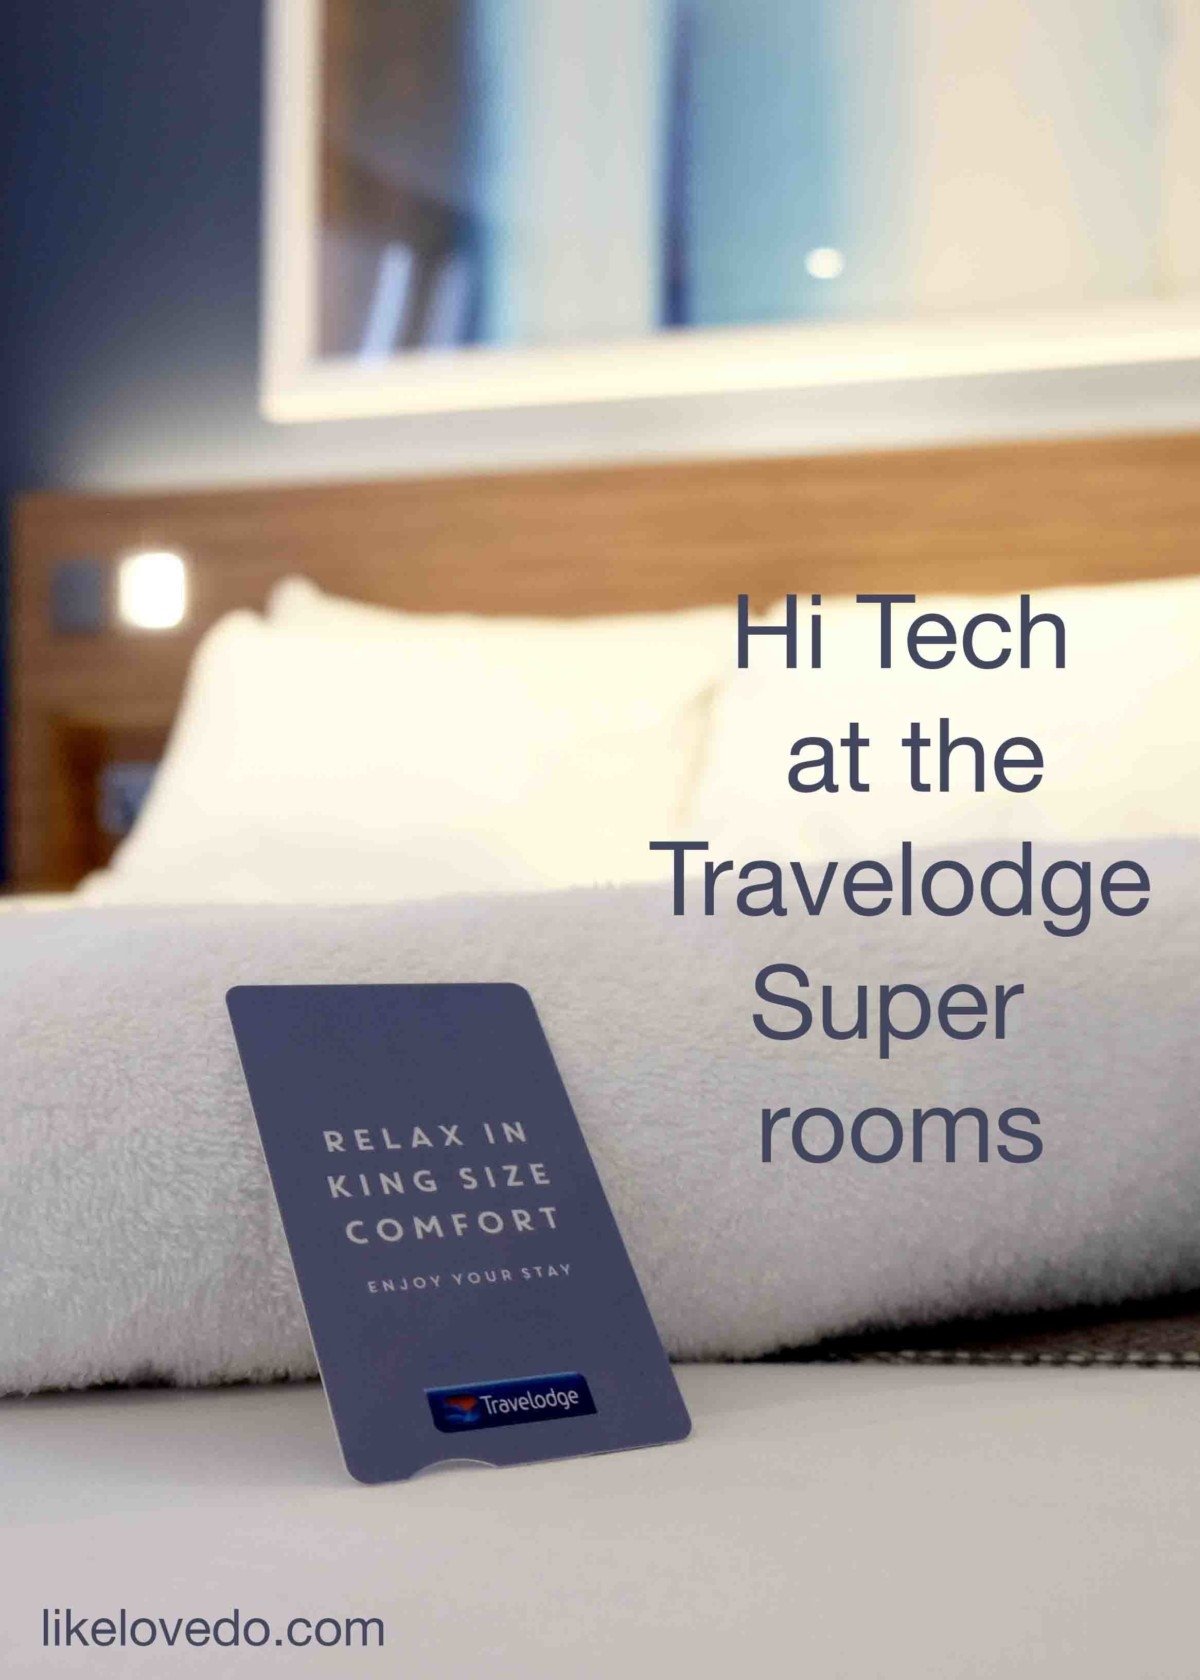 Travelodge Super rooms pin